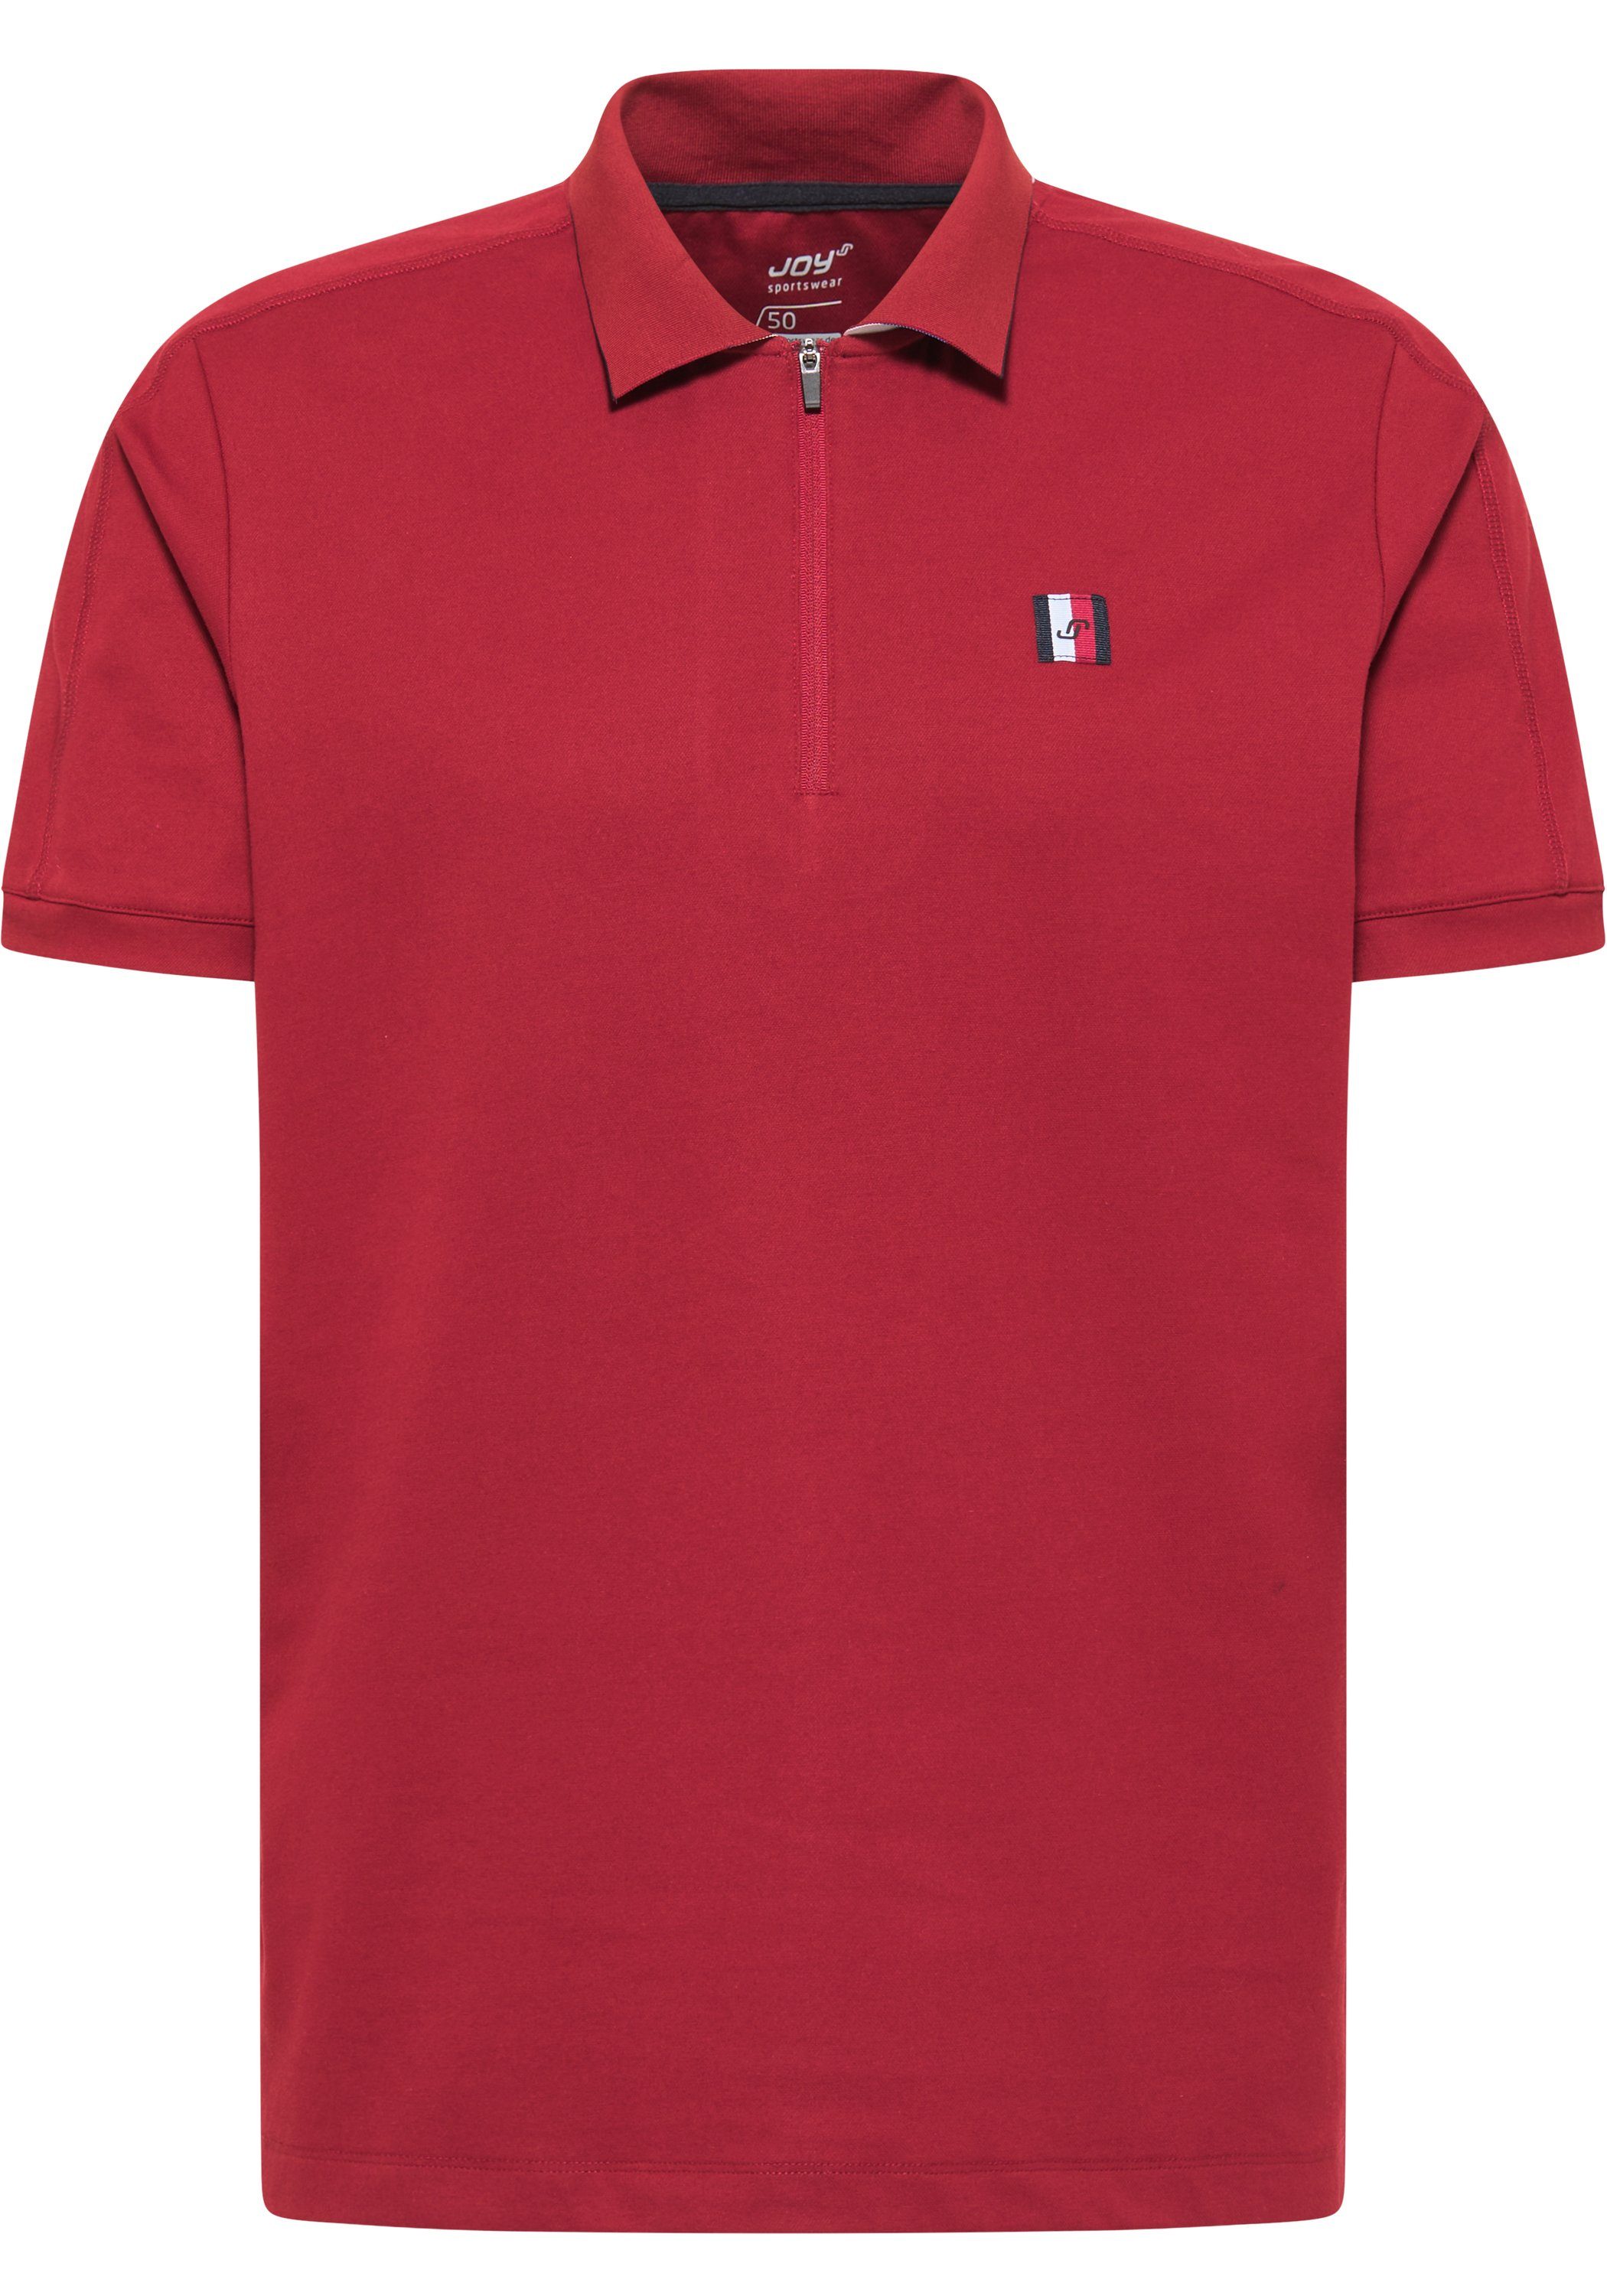 MIRKO Polo Poloshirt Joy red Sportswear deep